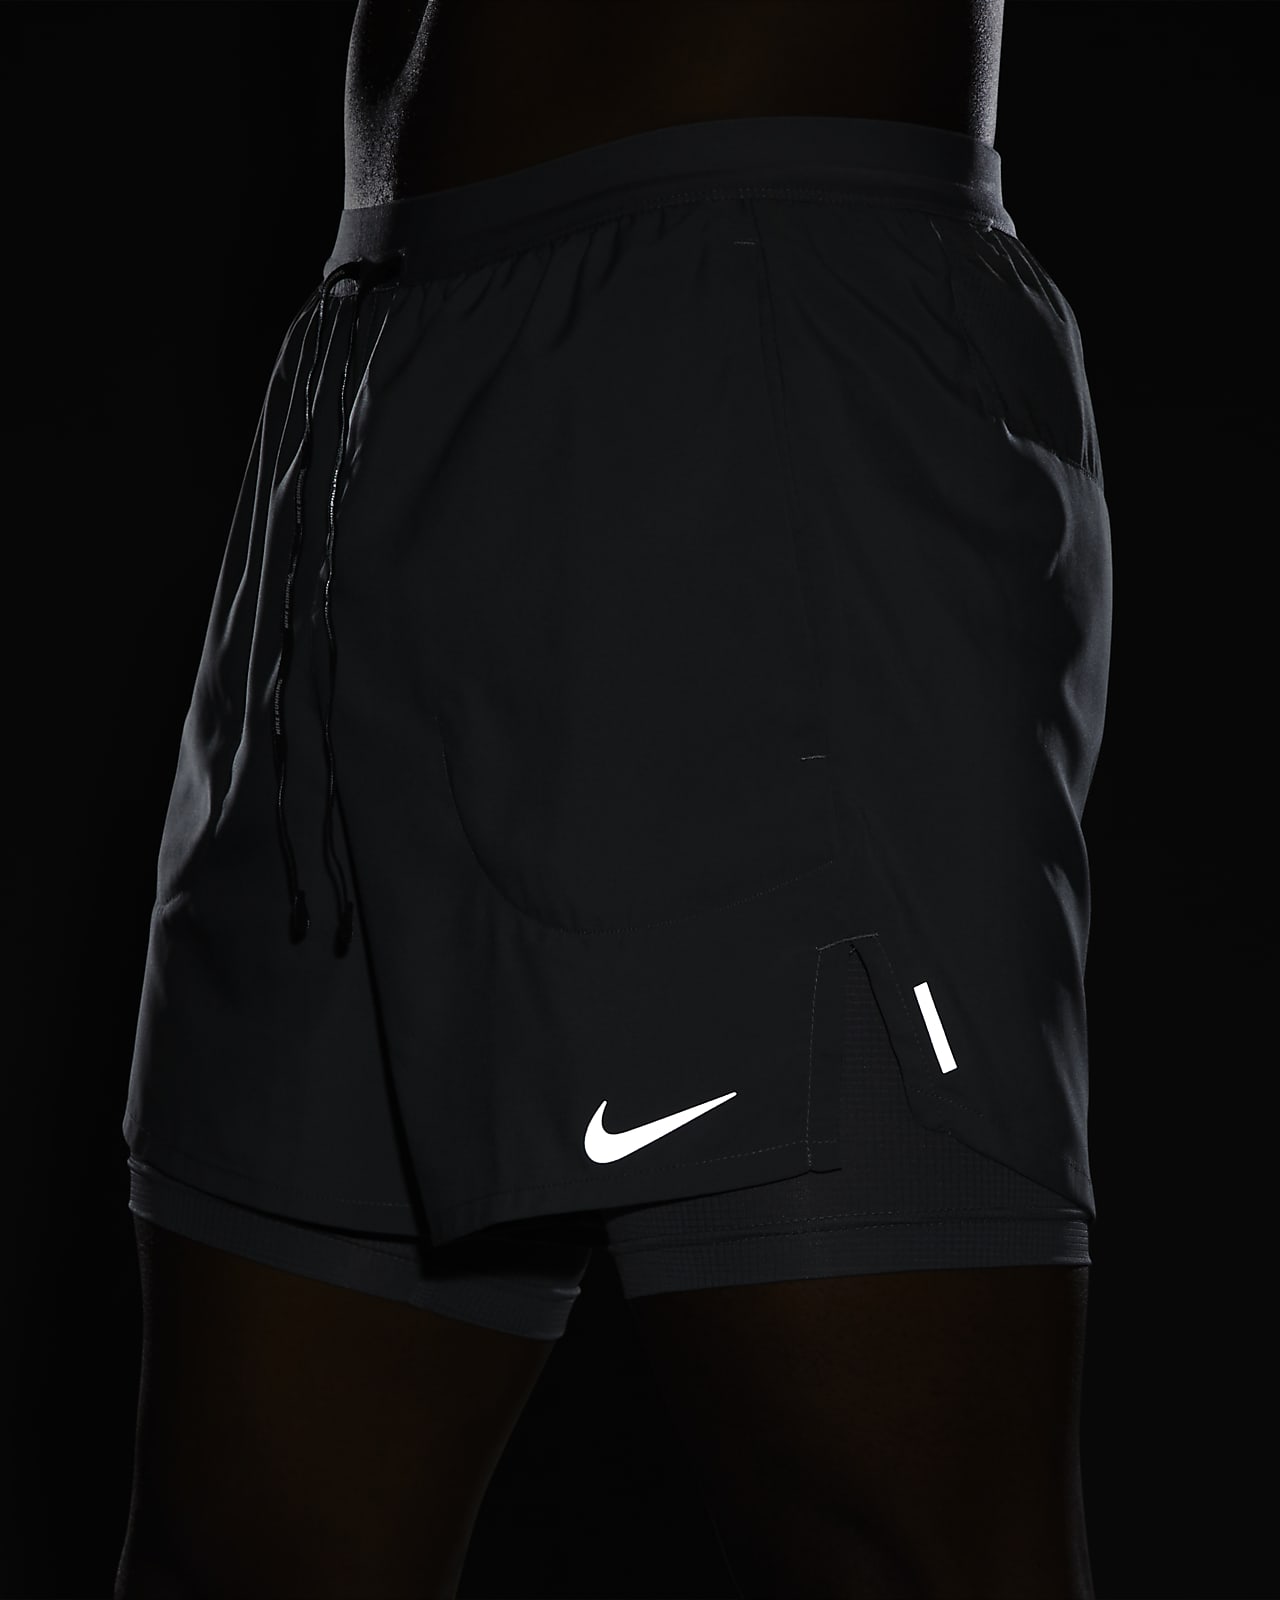 Nike Men's Dri-FIT Flex Stride 5” Shorts